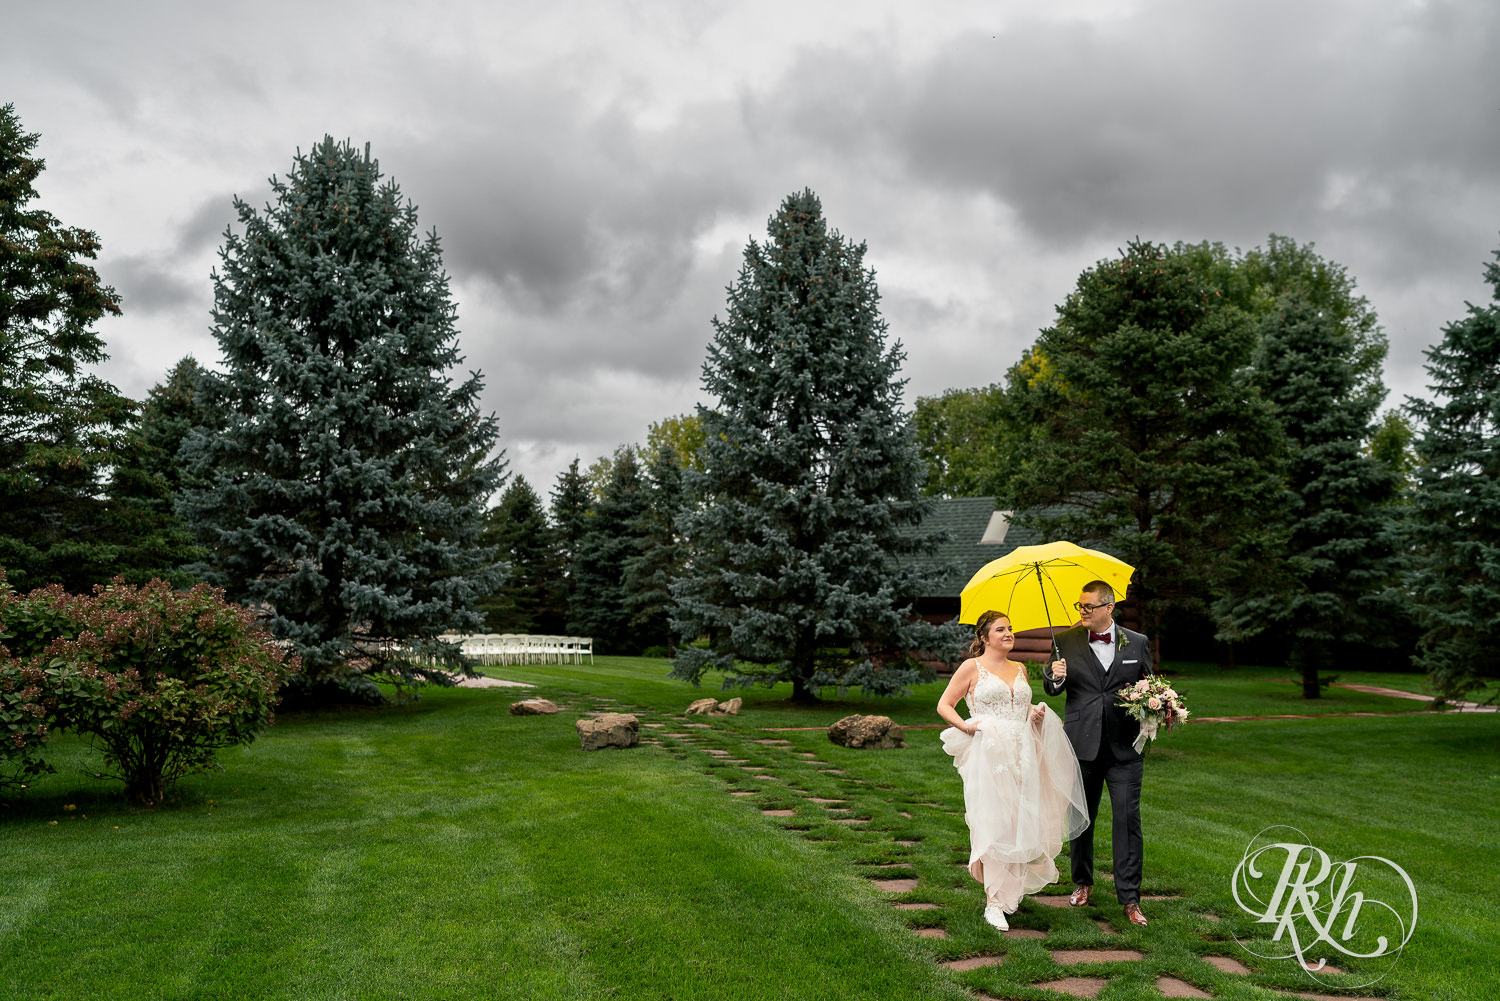 Bride and groom walking under yellow umbrella on rainy day at Glenhaven Events in Farmington, Minnesota.